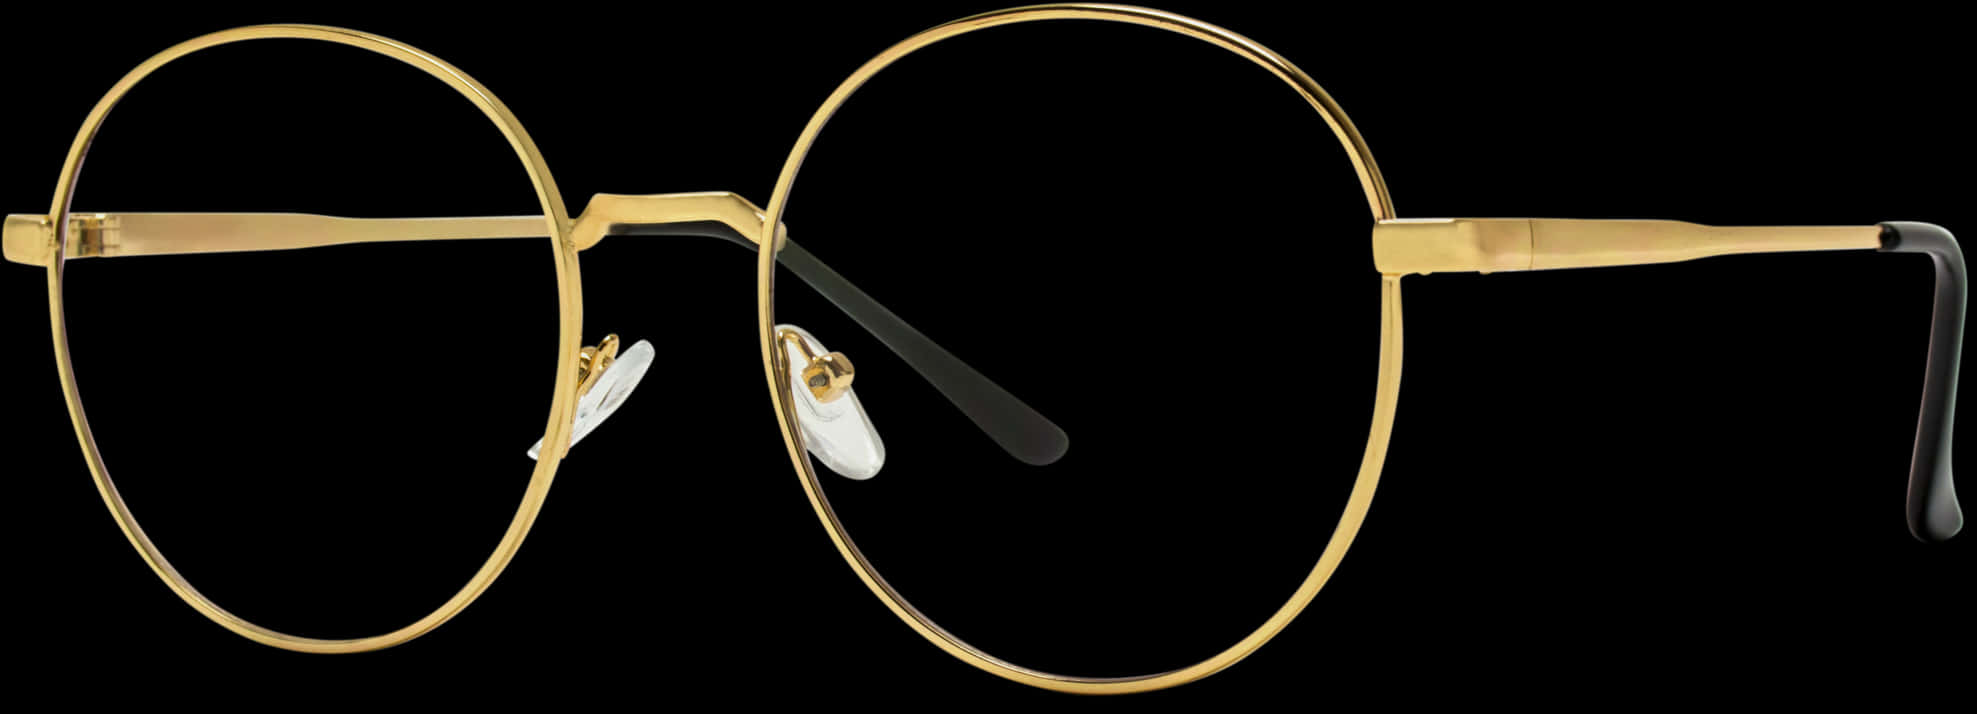 Elegant Gold Round Eyeglasses PNG